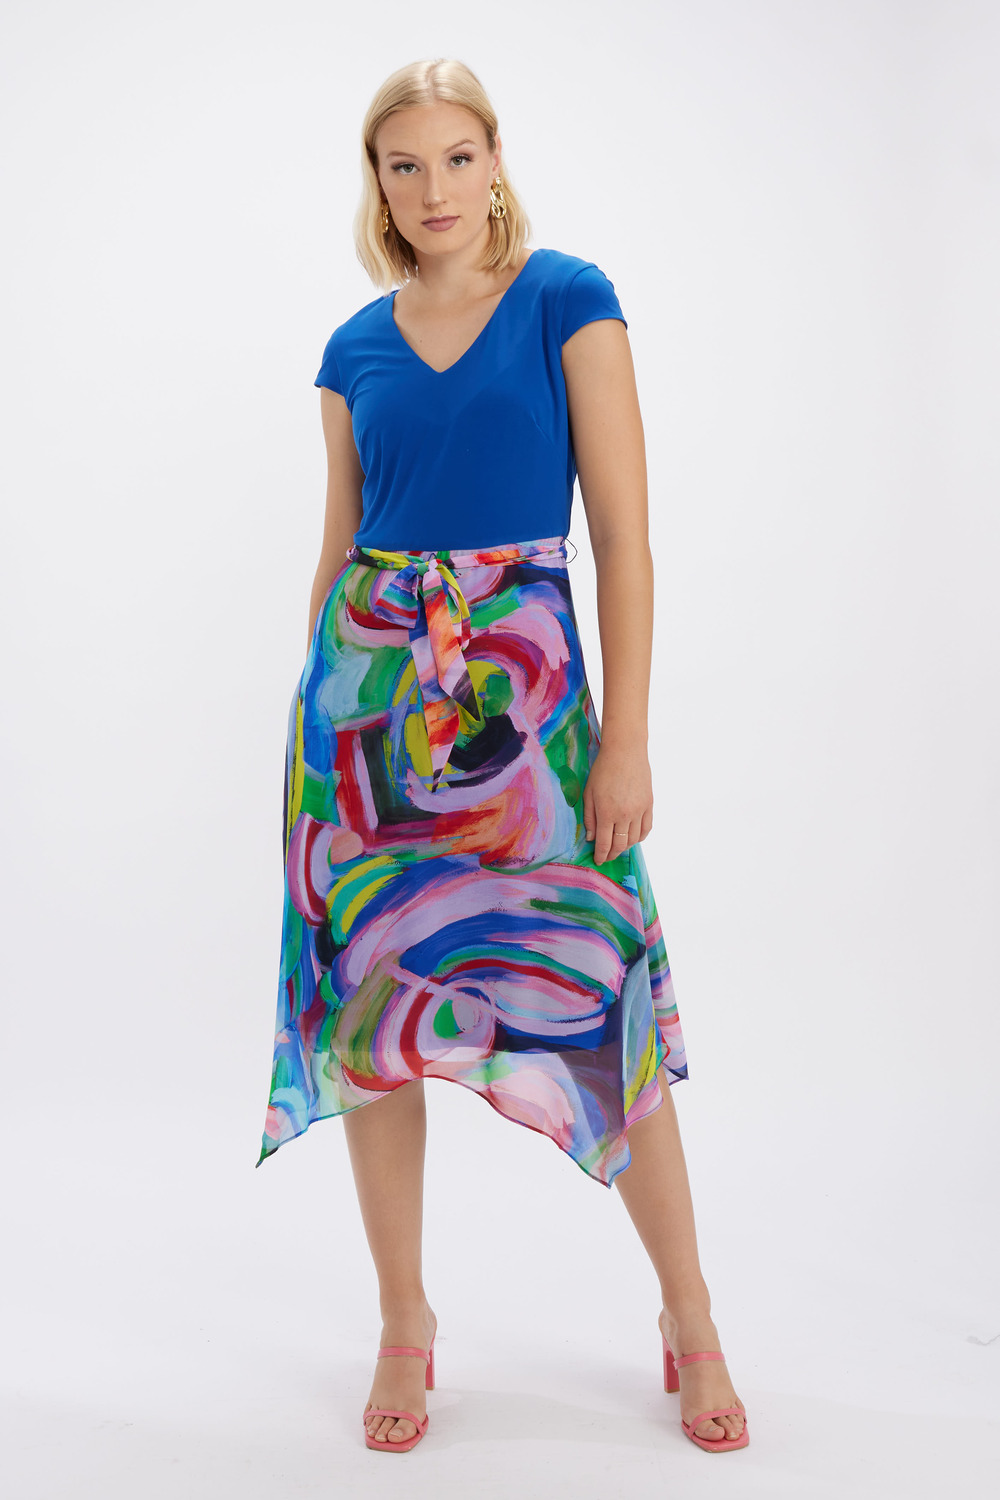 Dual-Fabric Multi-Coloured Dress Style 246376. Royal/multi